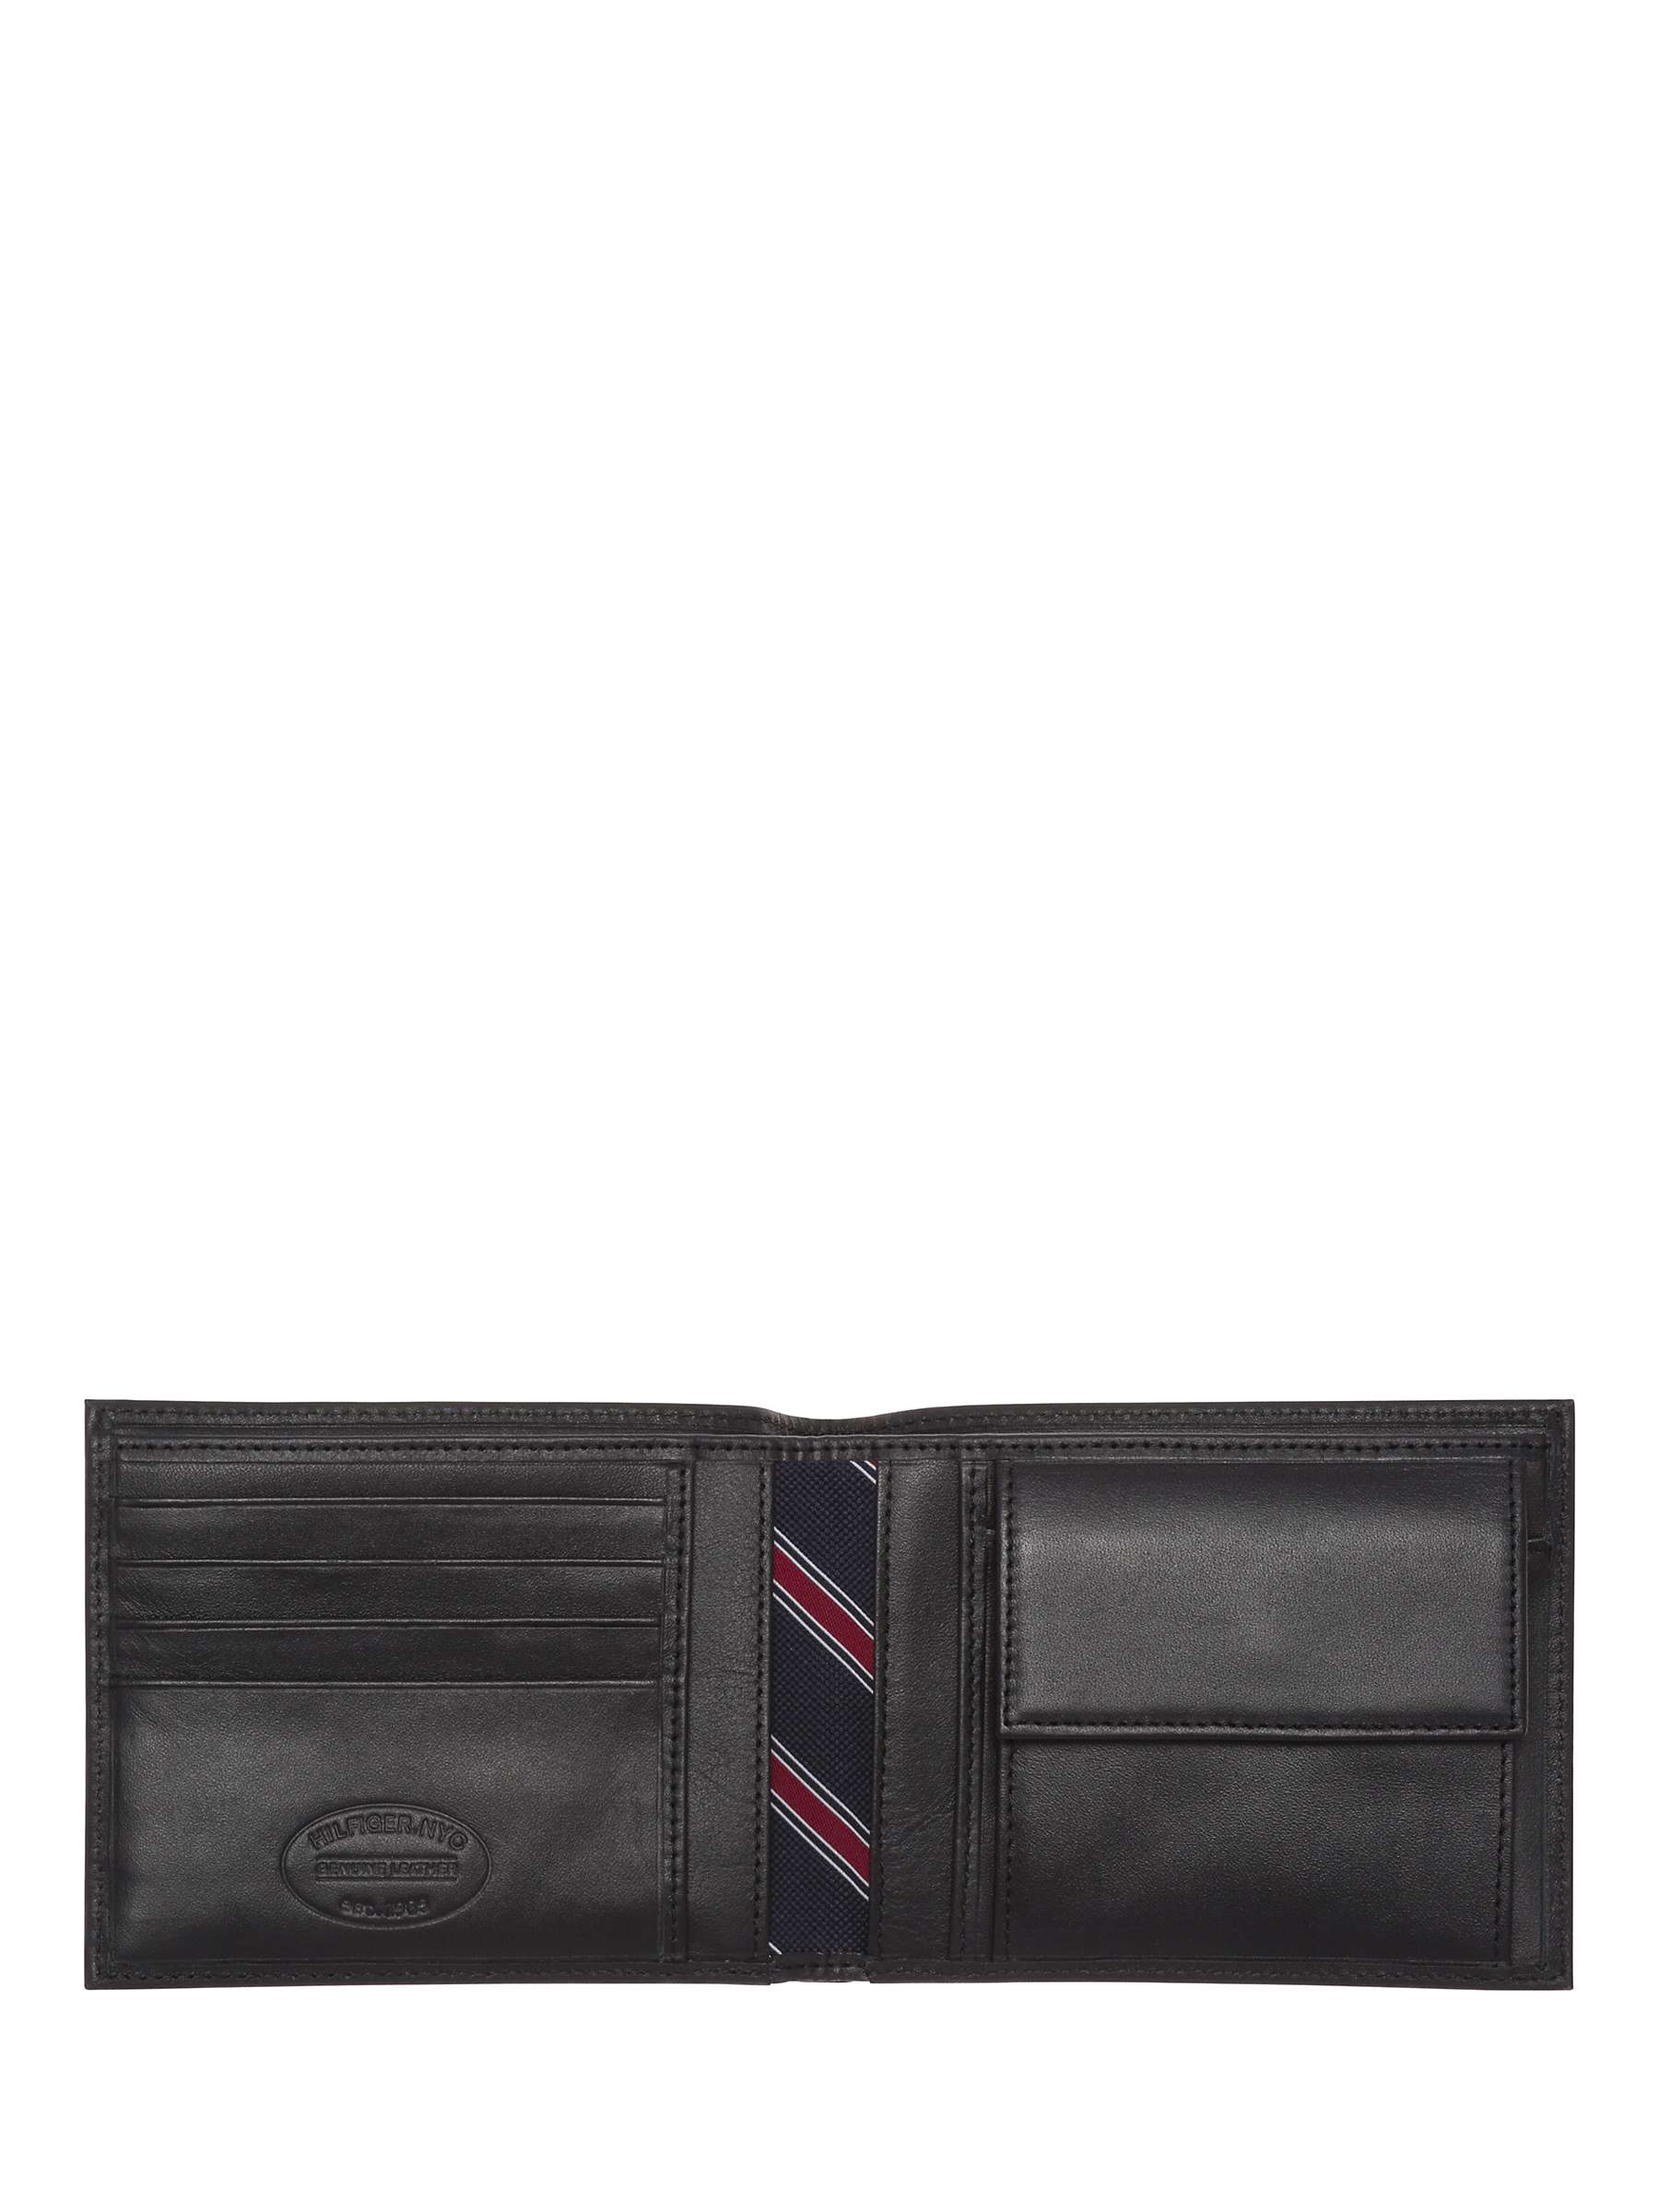 Tommy Hilfiger Eton Leather Coin Wallet, Black at John Lewis & Partners